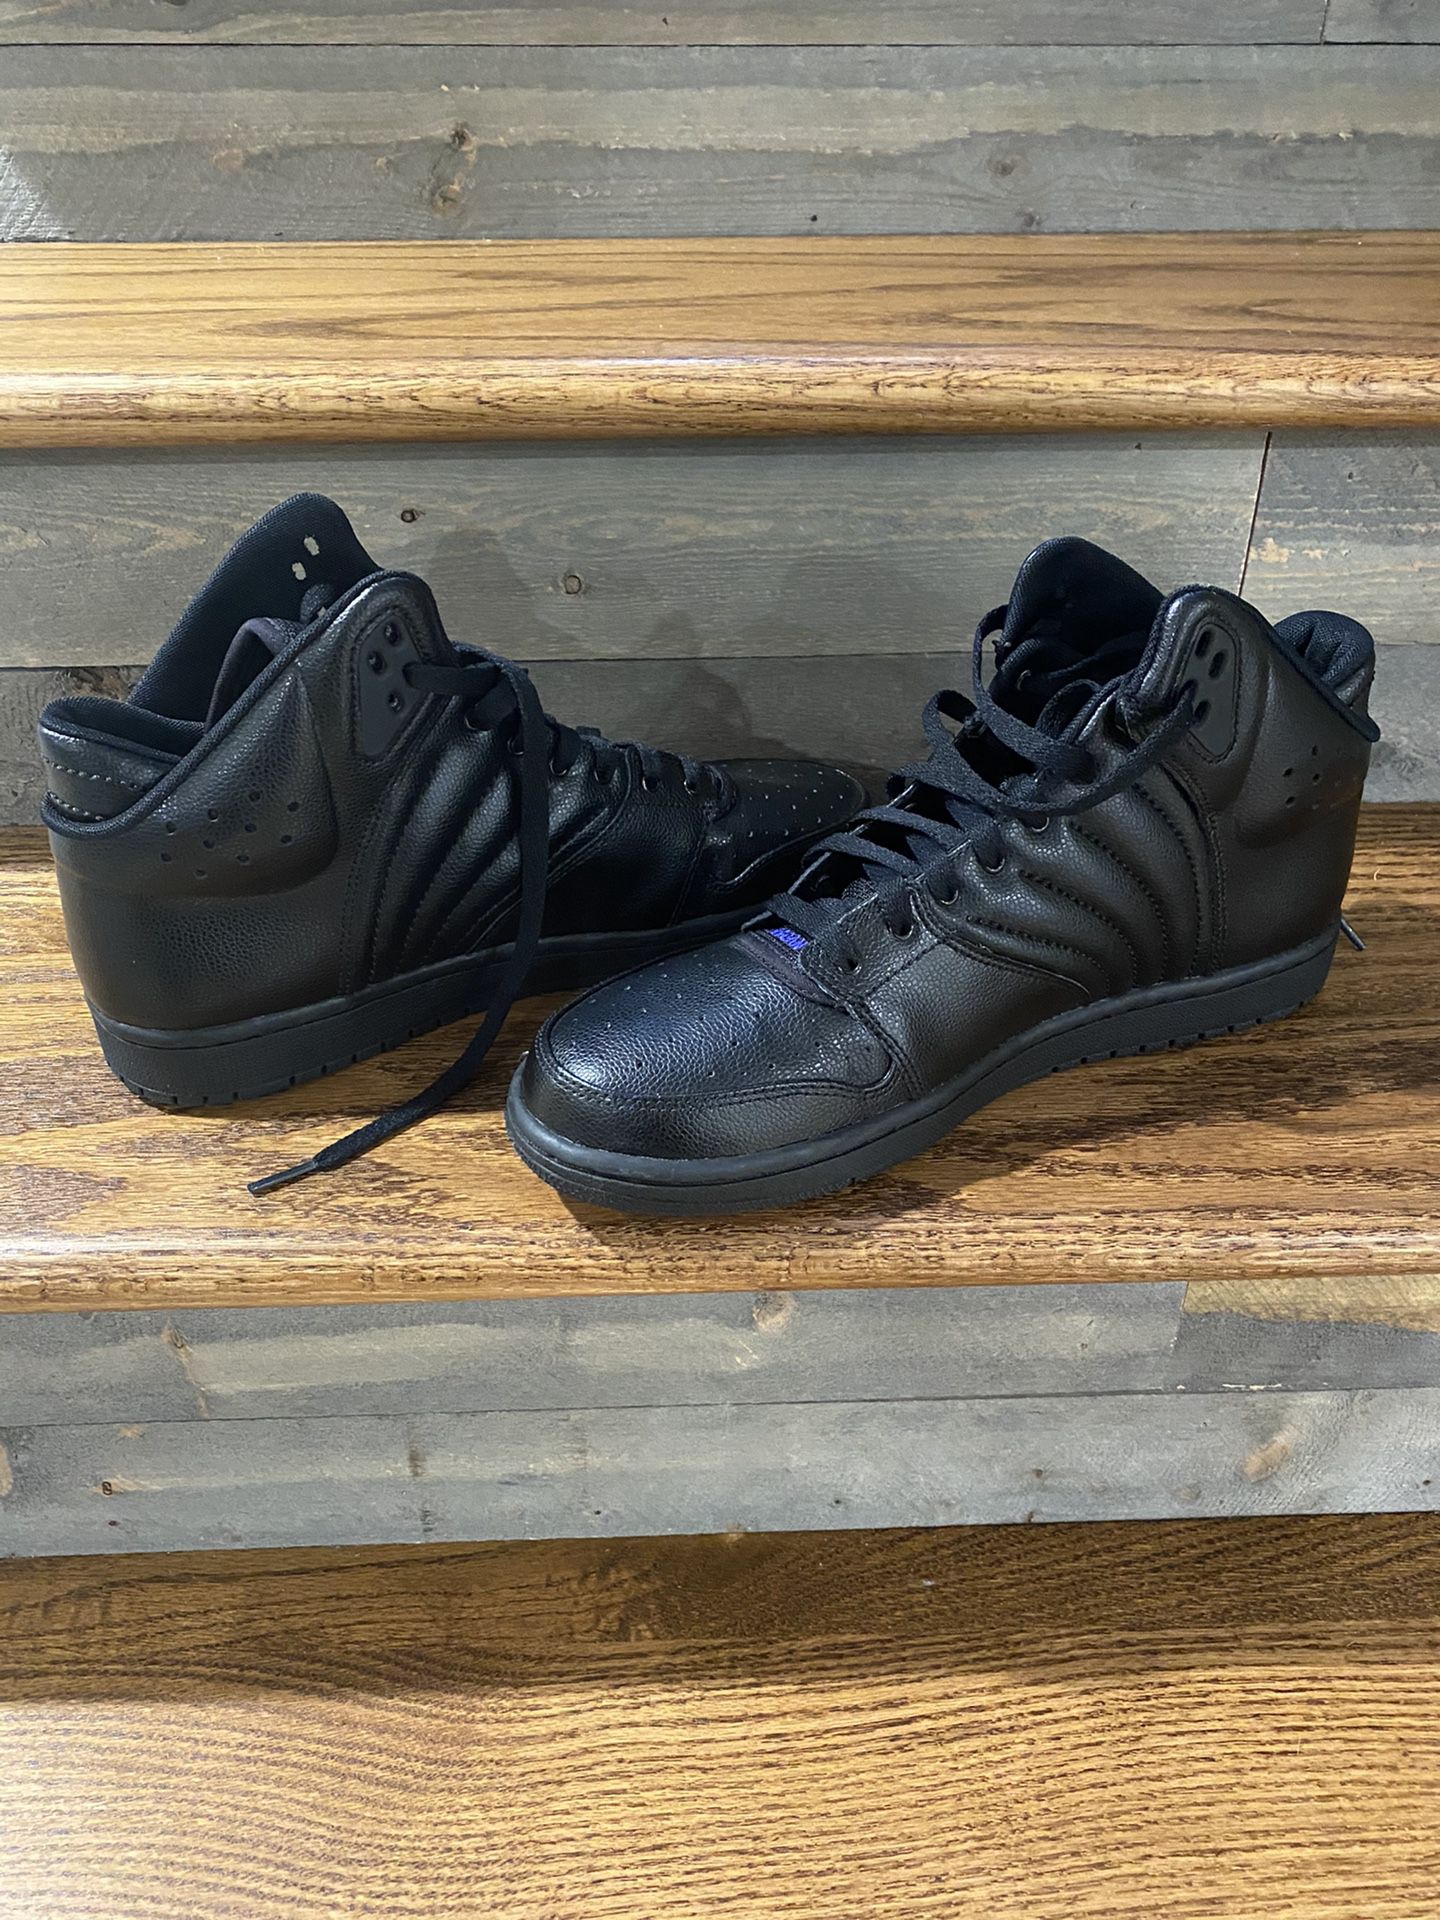 Nike Jordan 1 Flight Gym Shoes - Size 10 & Size 11 (NEW)